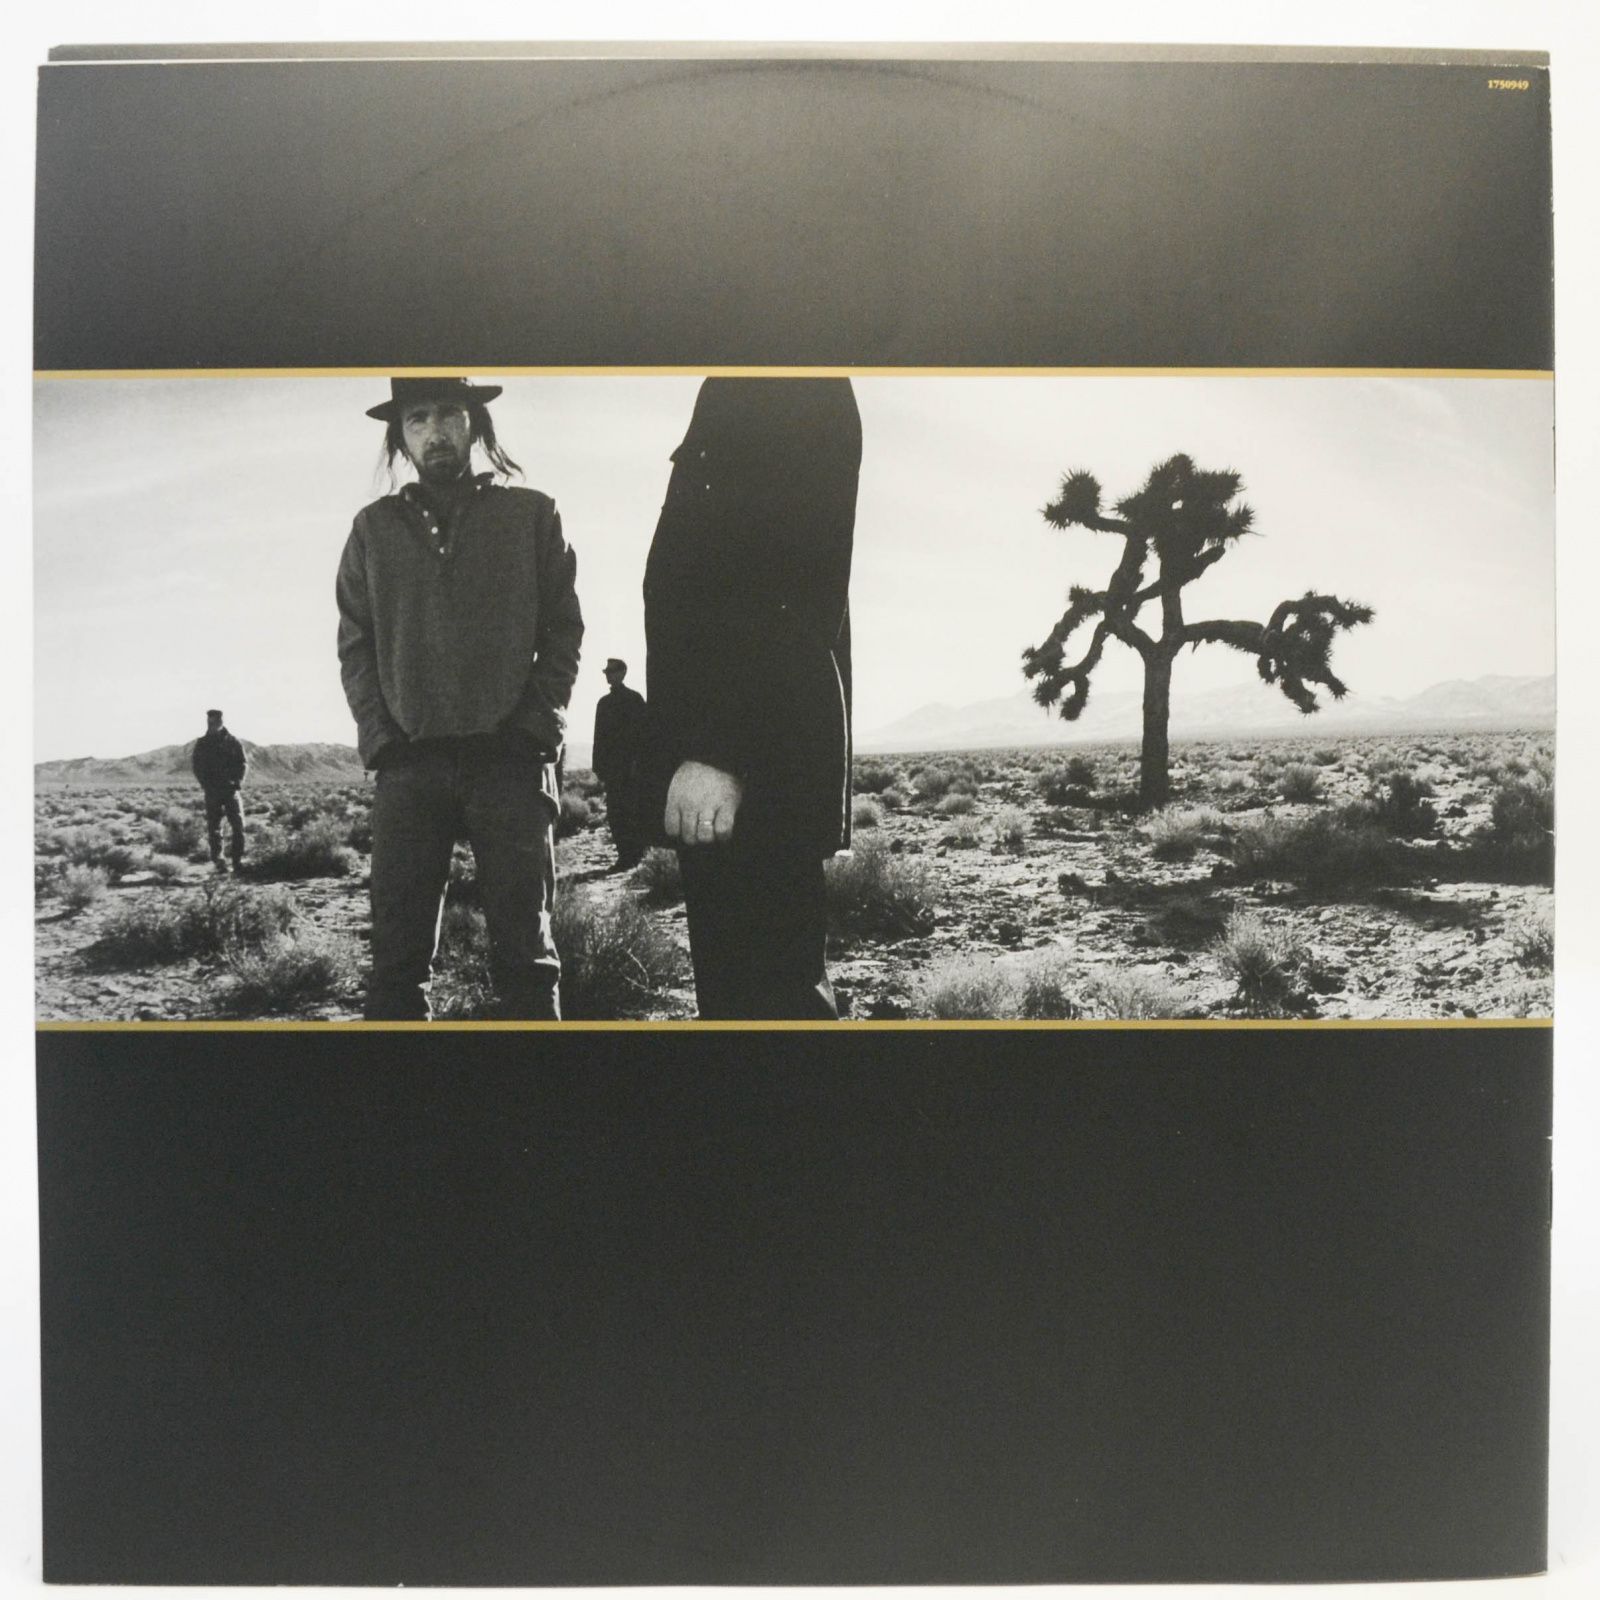 U2 — The Joshua Tree (2LP), 1987